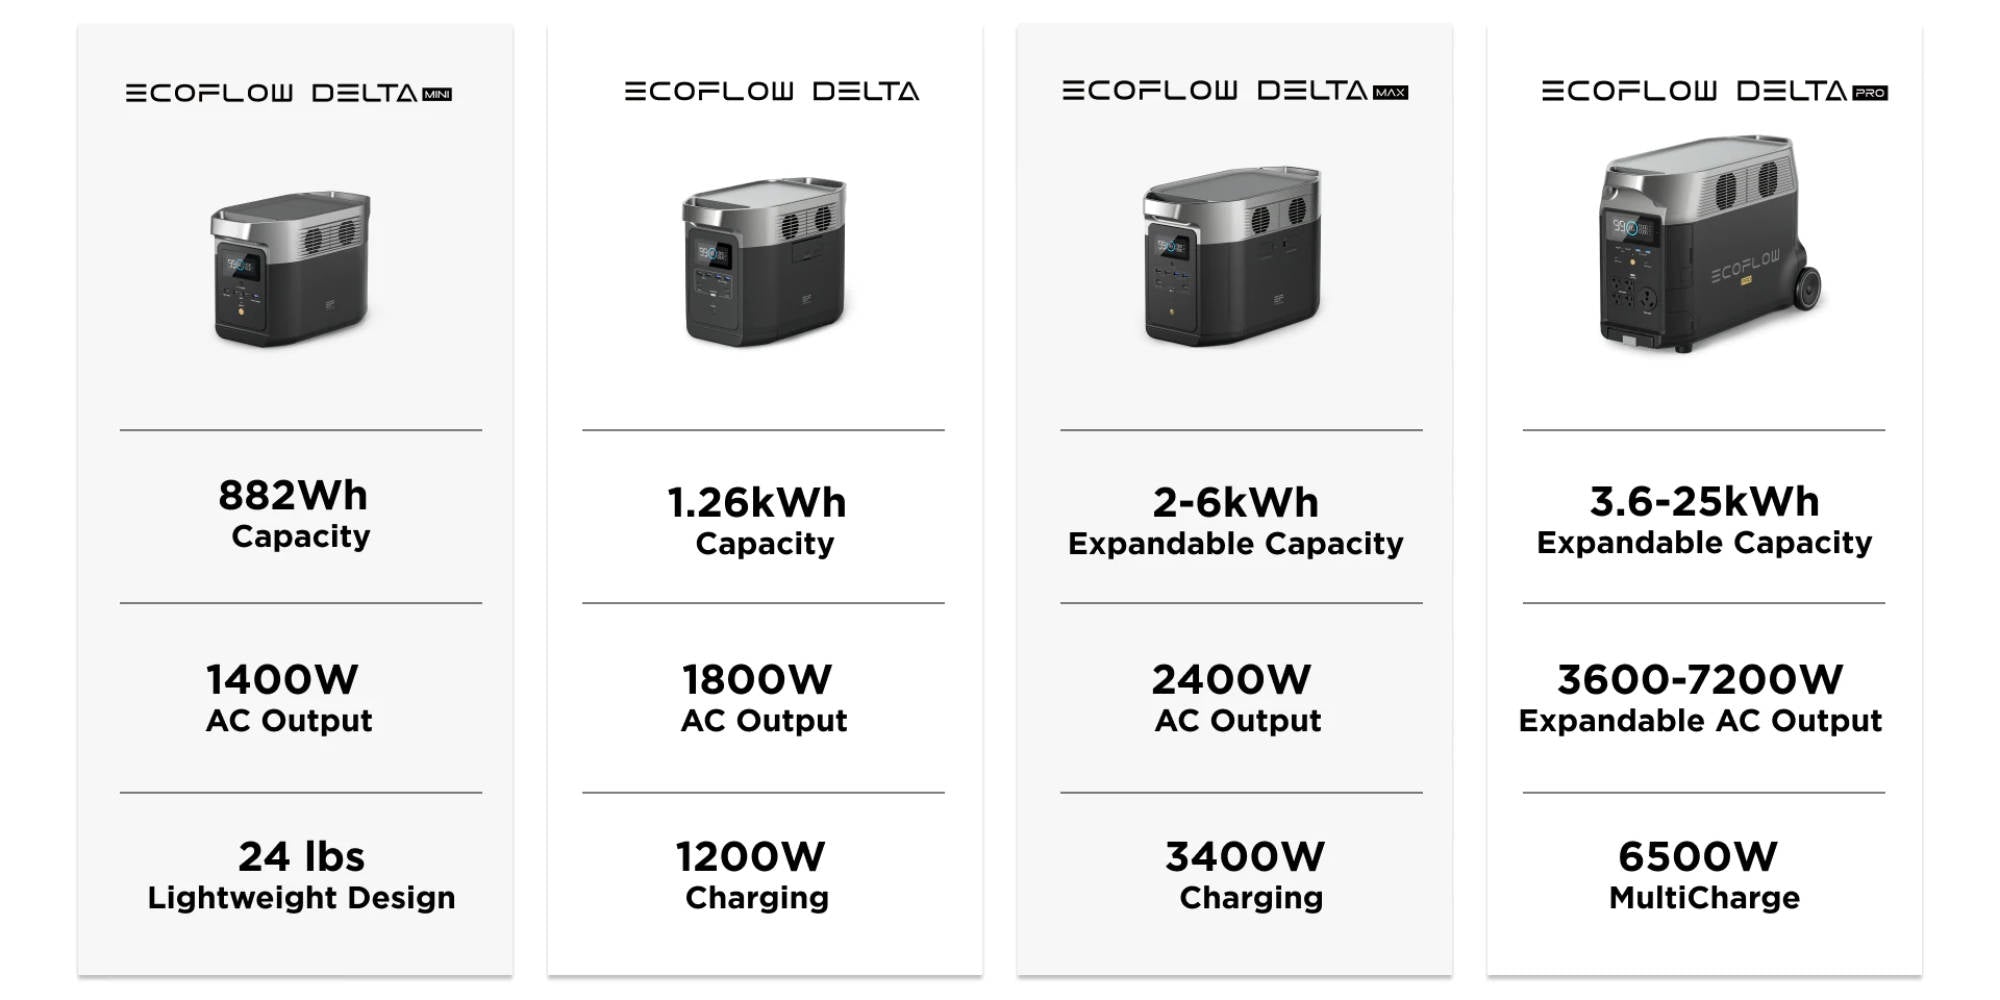 EcoFlow DELTA Series Comparison: Which Portable Power Station